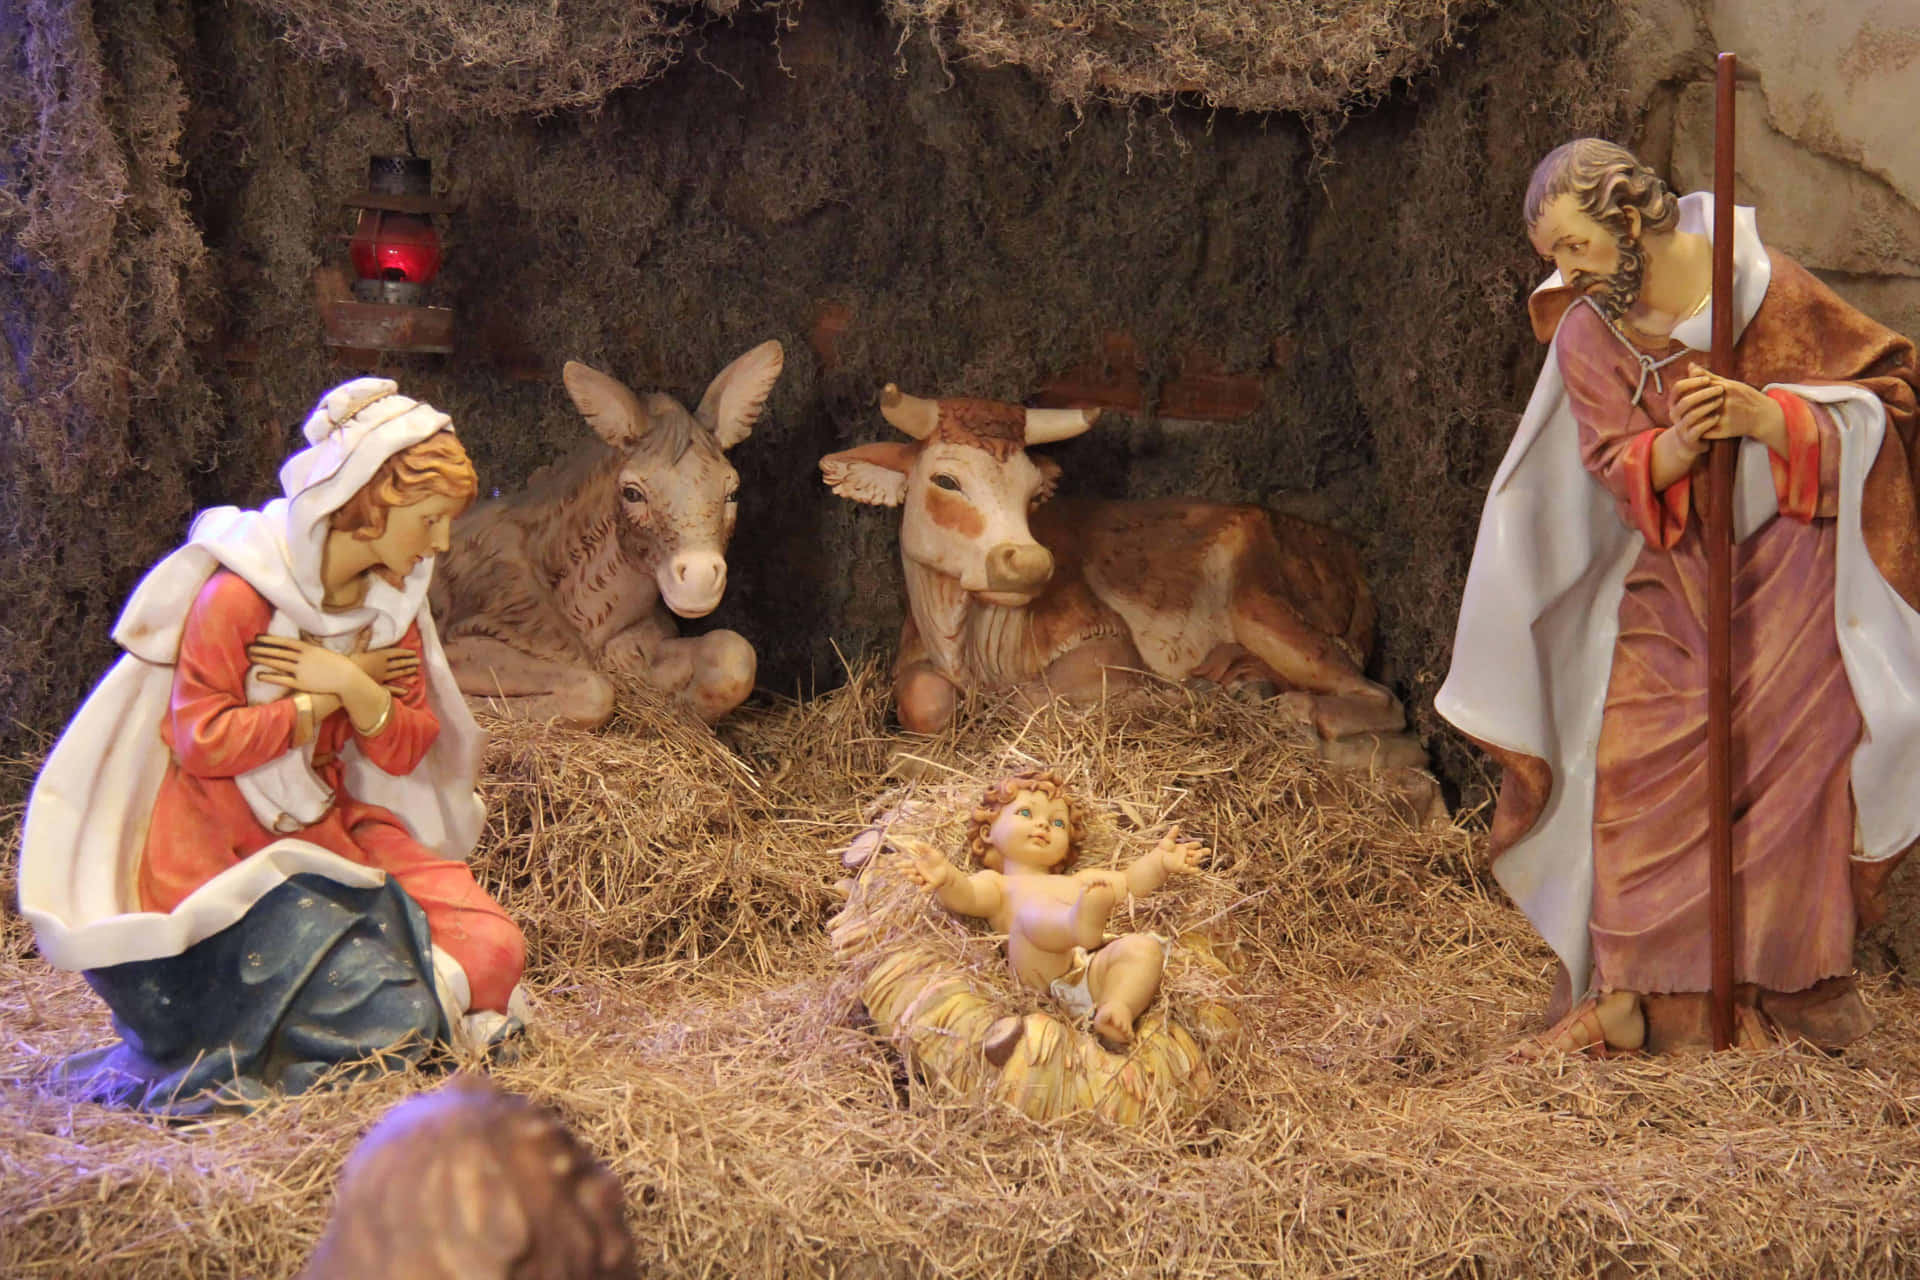 Let us adore the infant Jesus in the Nativity Scene.